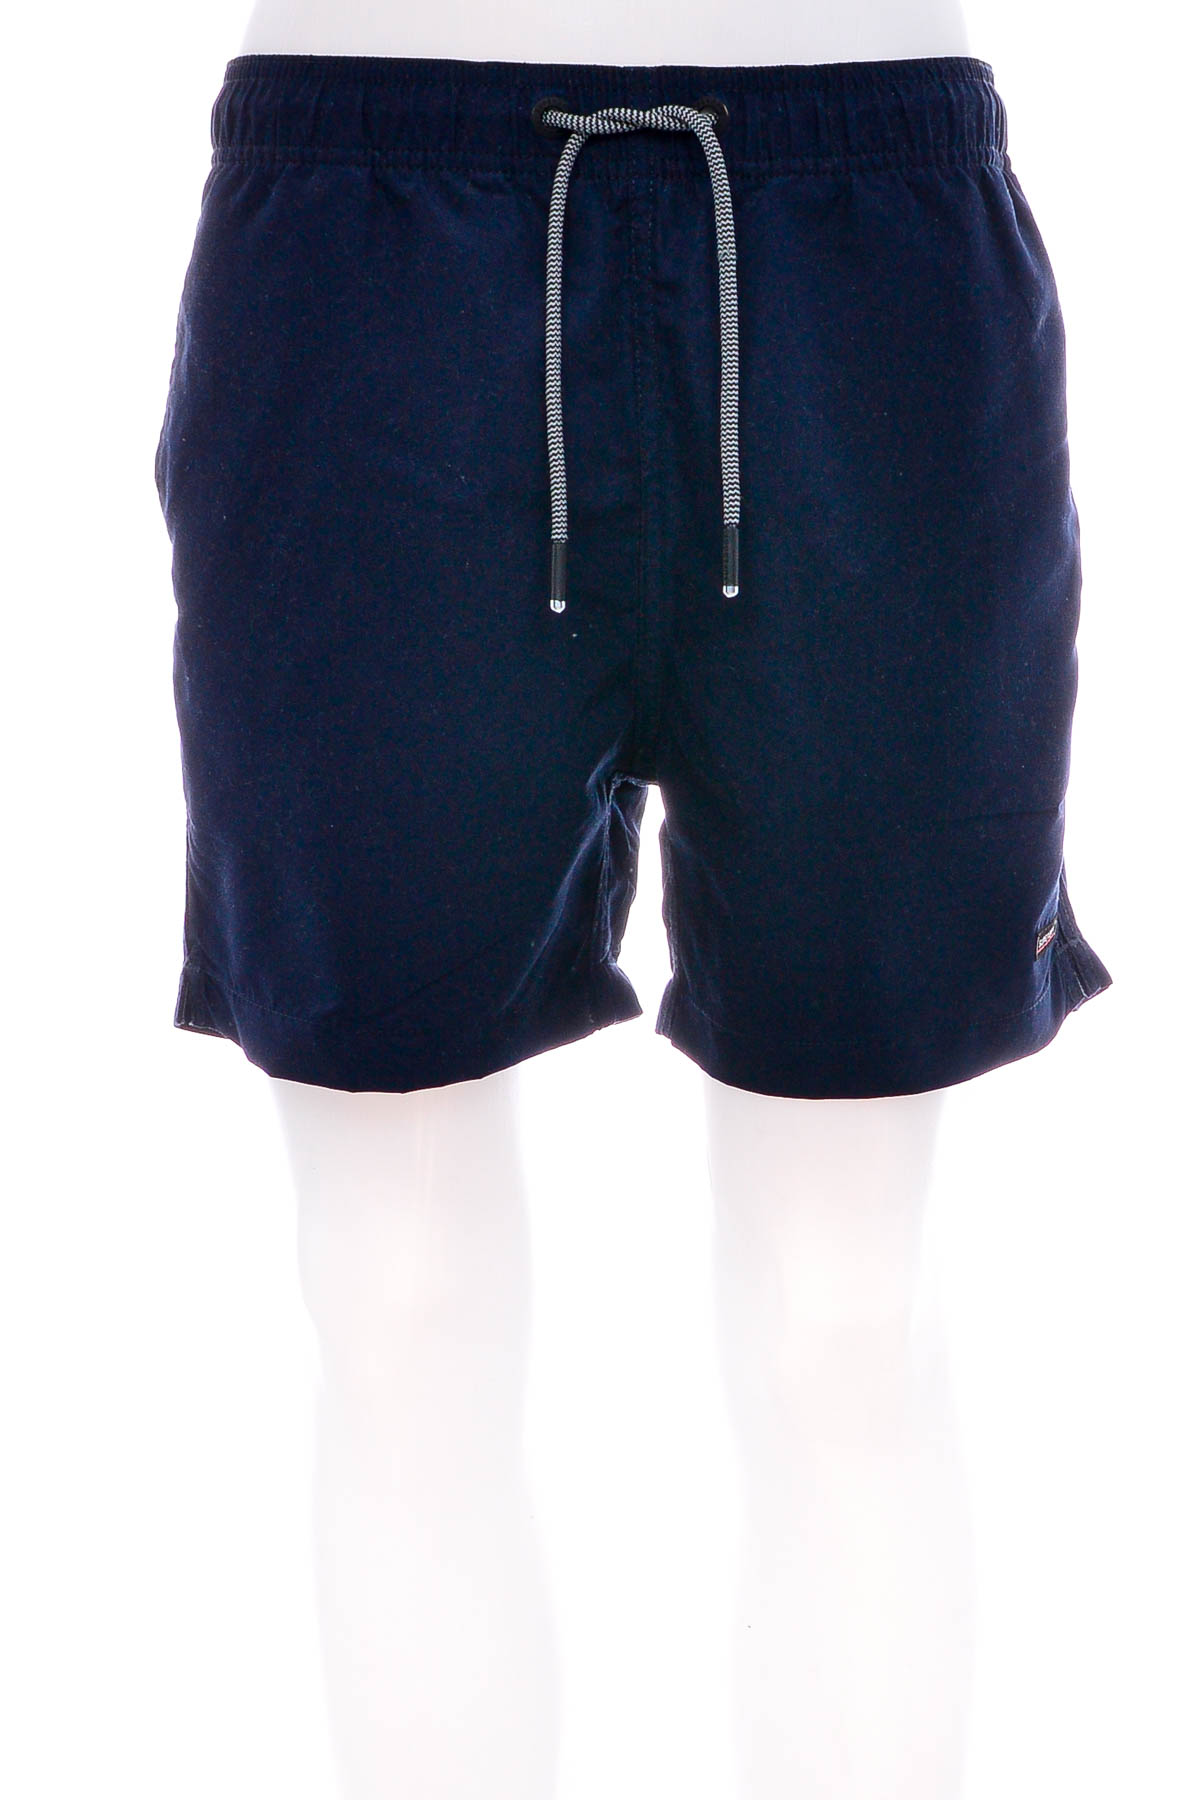 Men's shorts - SuperDry - 0